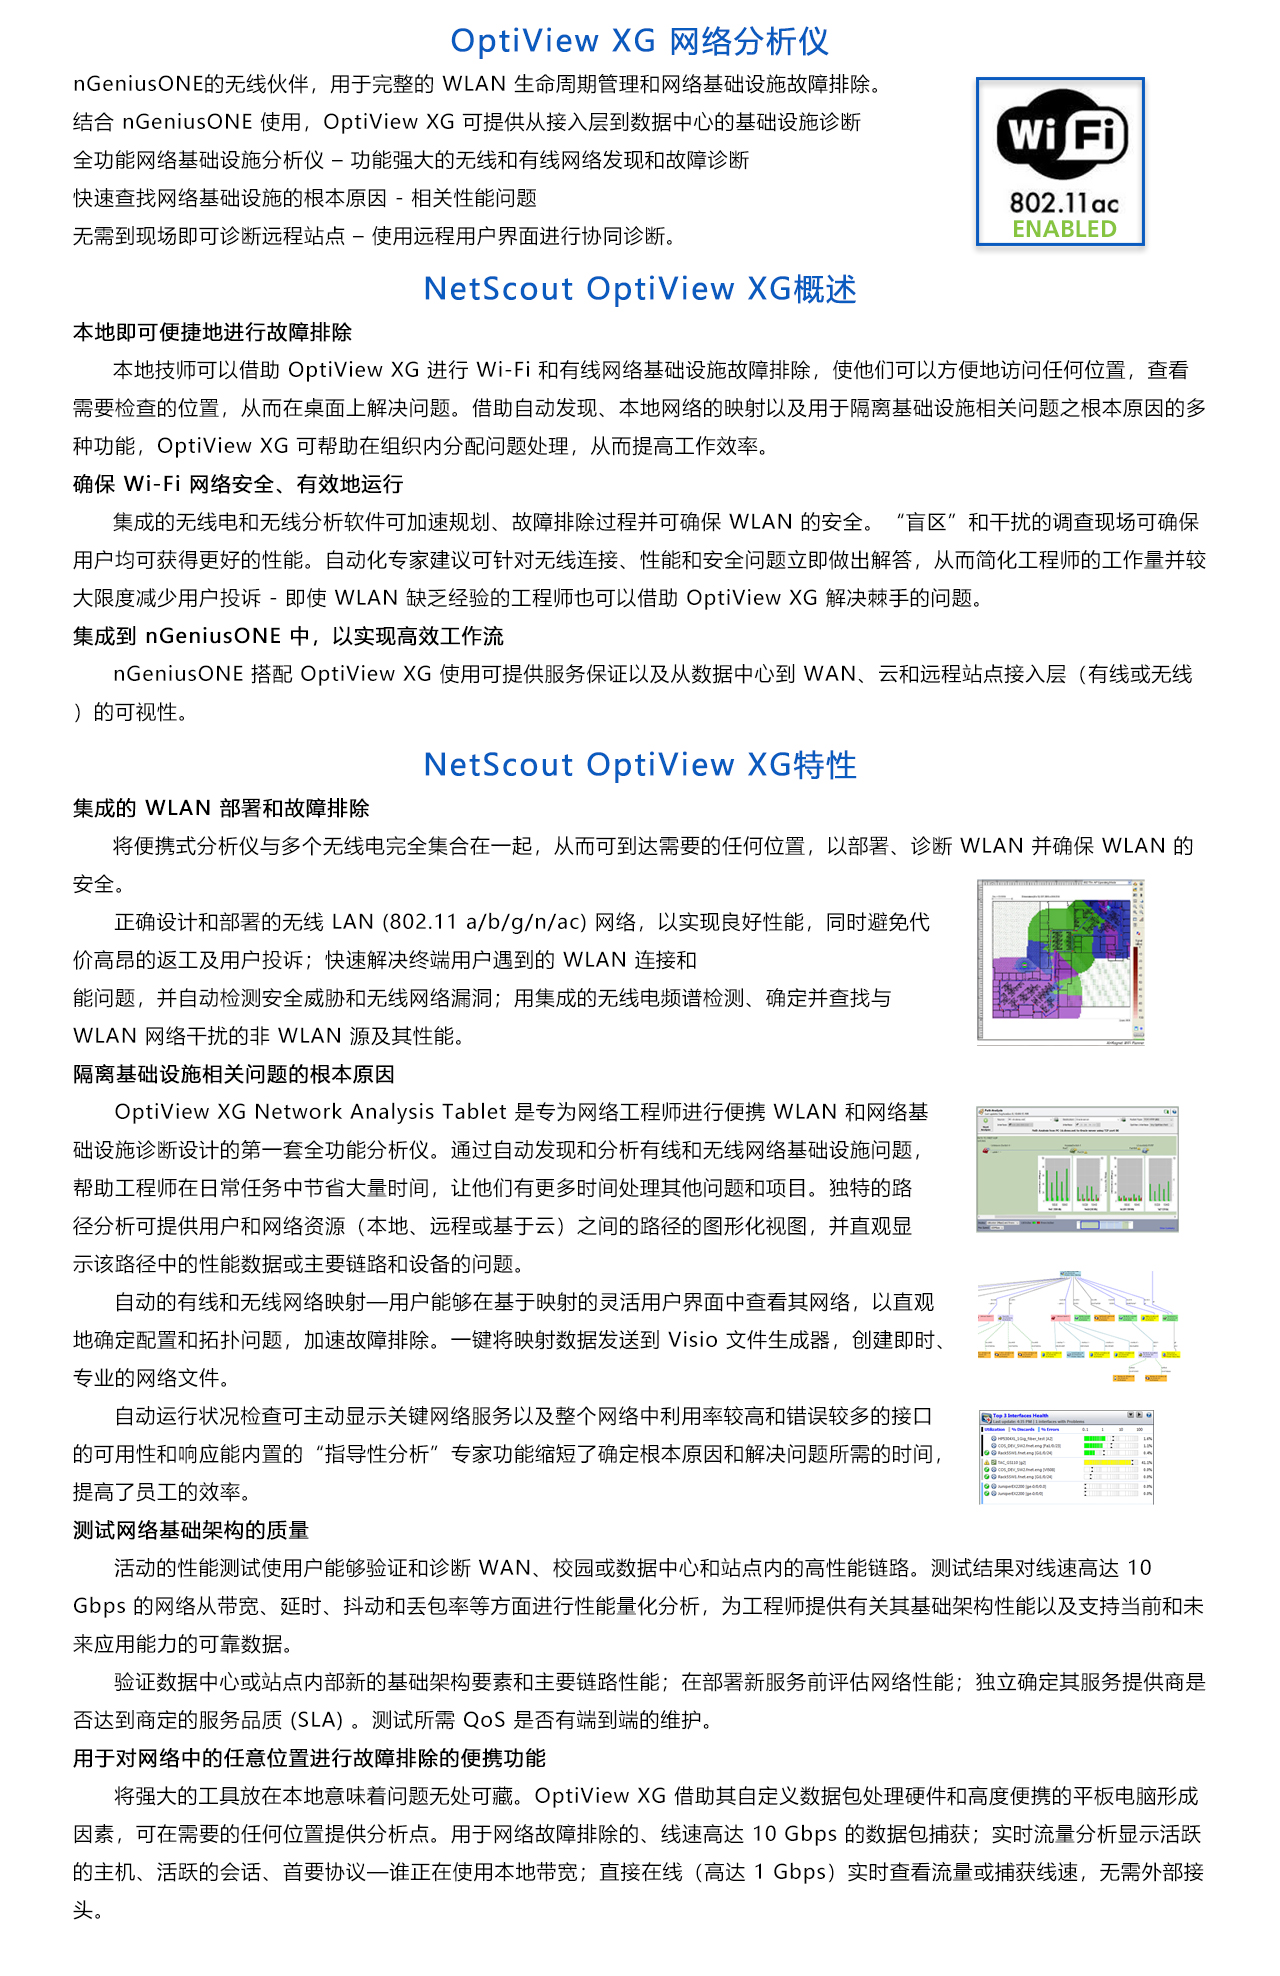 NETSCOUT OptiView XG网络分析仪-概述.jpg